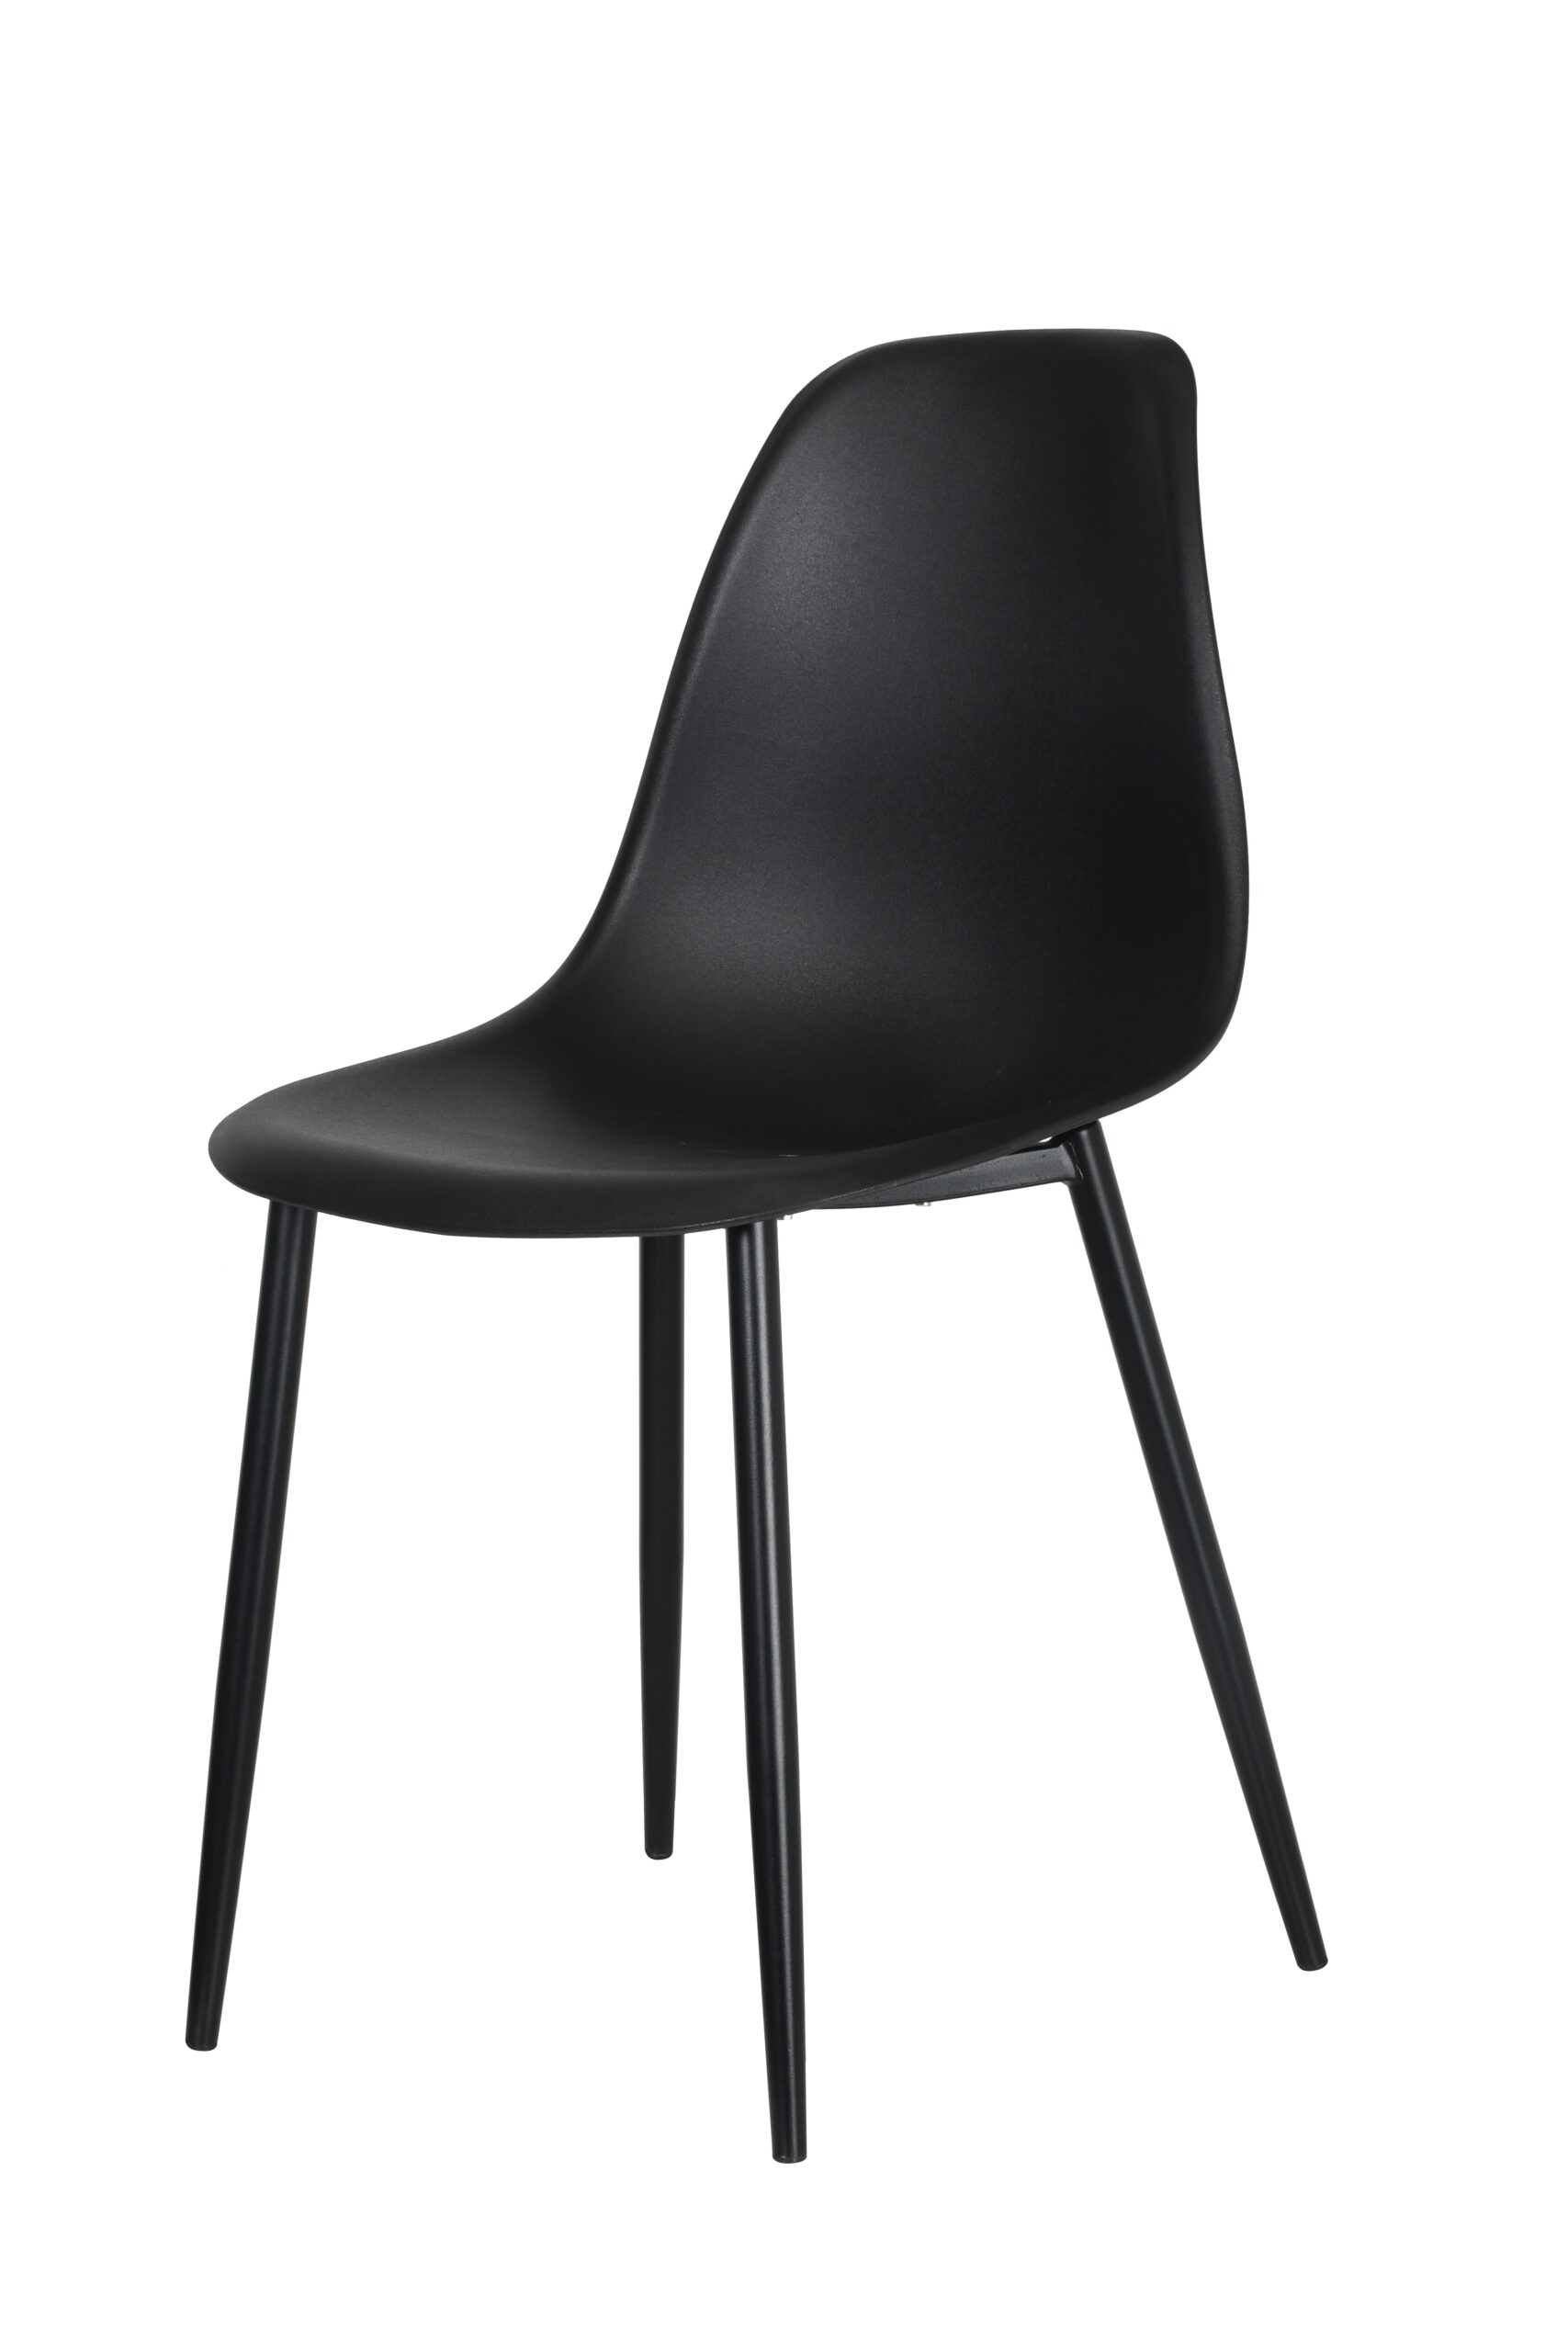 2x Curve Chair Black Plastic Seat With Black Metal Legs